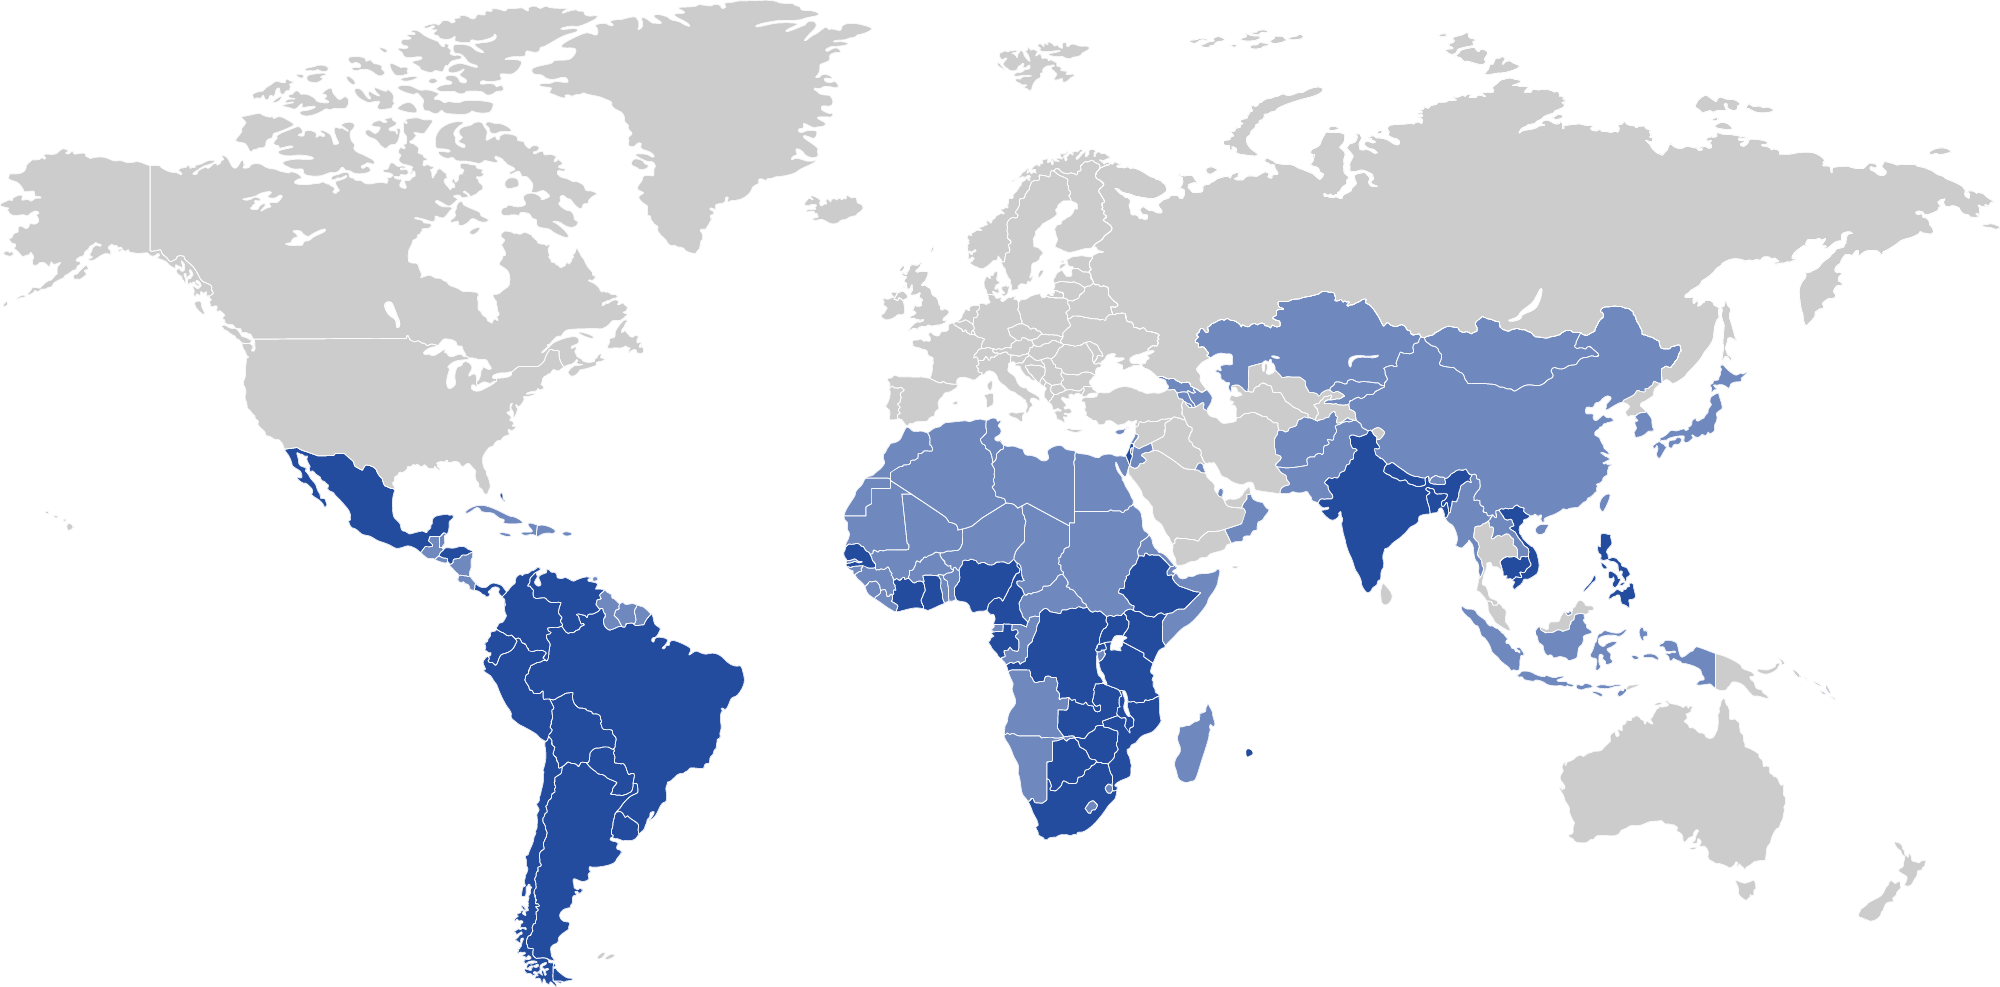 Klapton Re world map